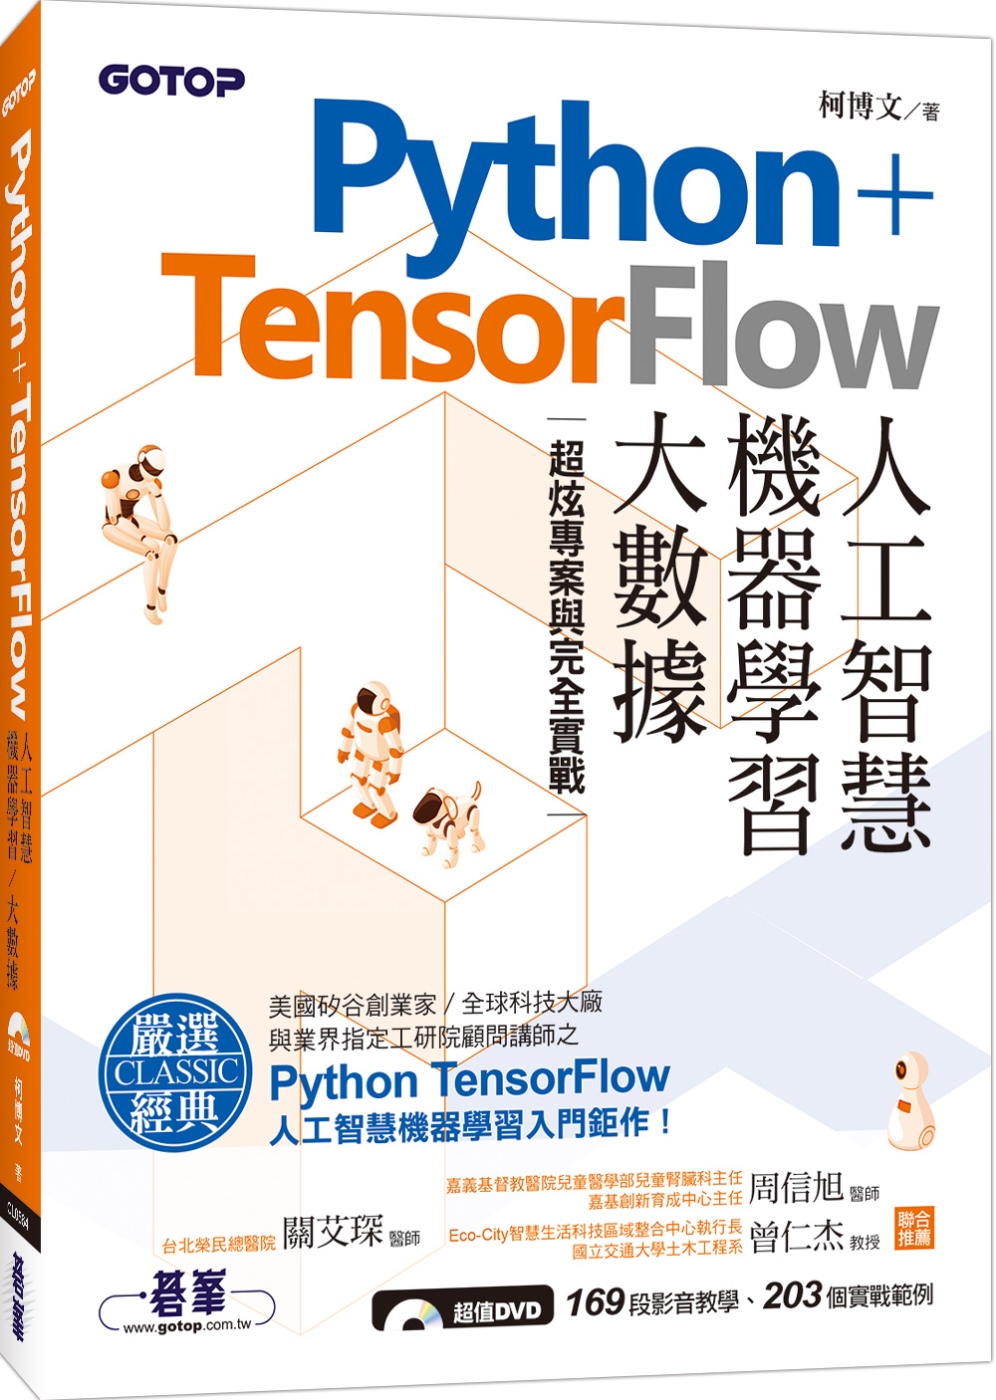 Python+TensorFlow人工智慧、機器學習、大數據...